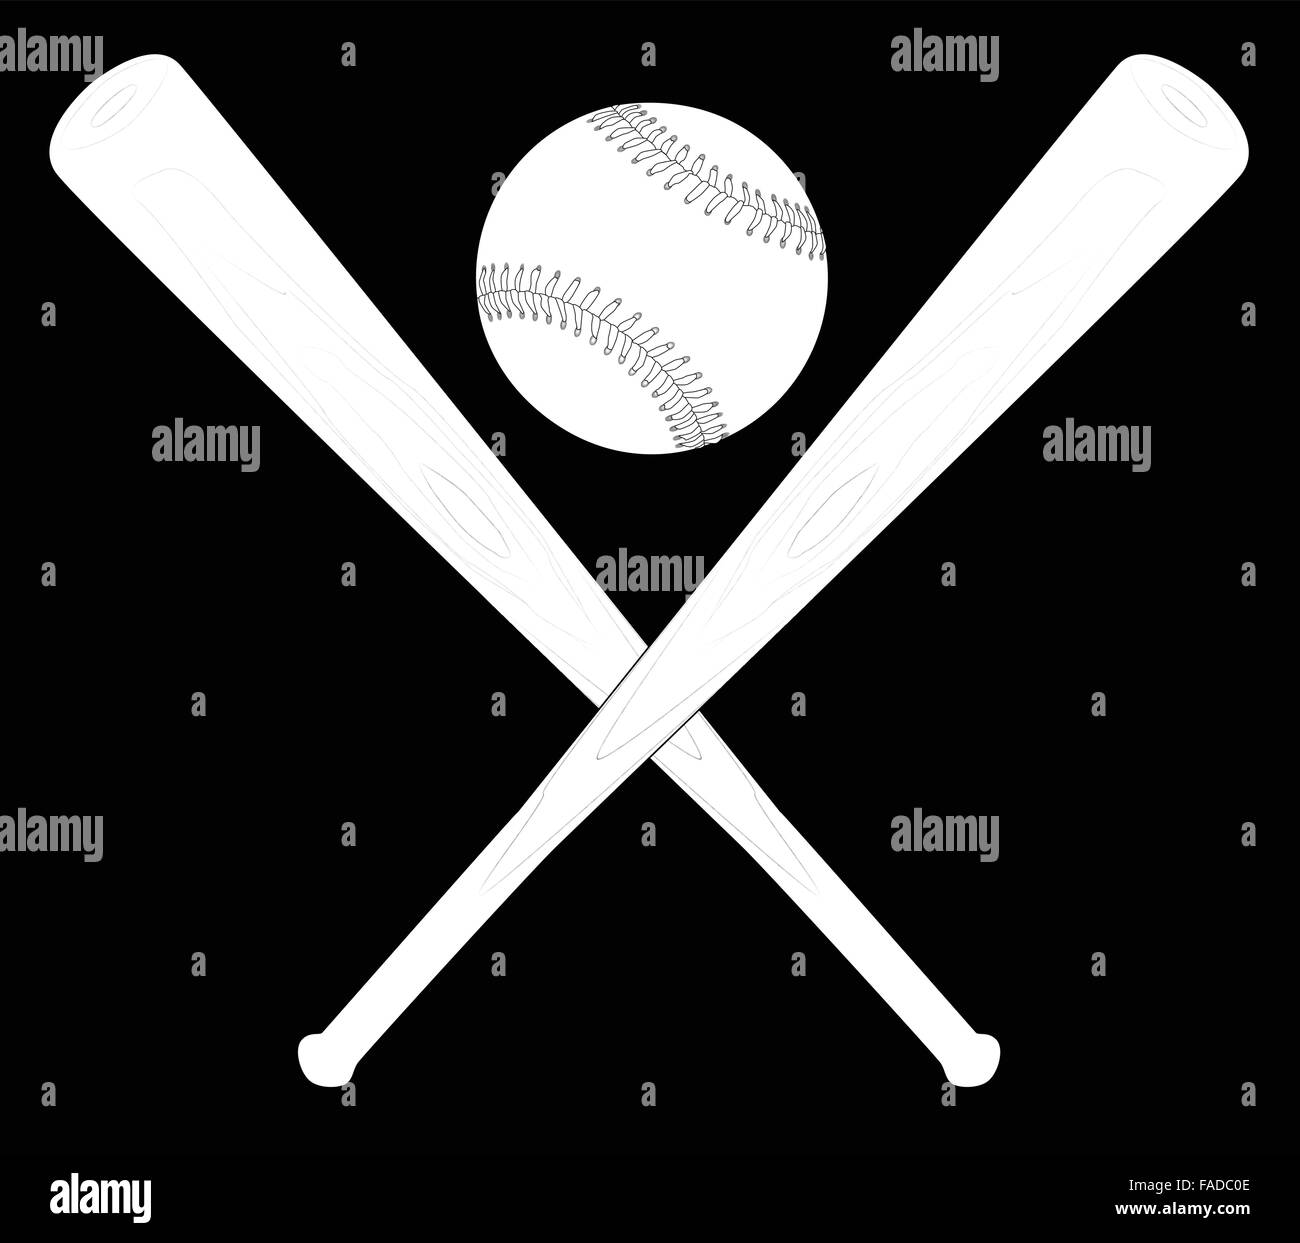 Baseball with a pair of crossed baseball bats Stock Vector